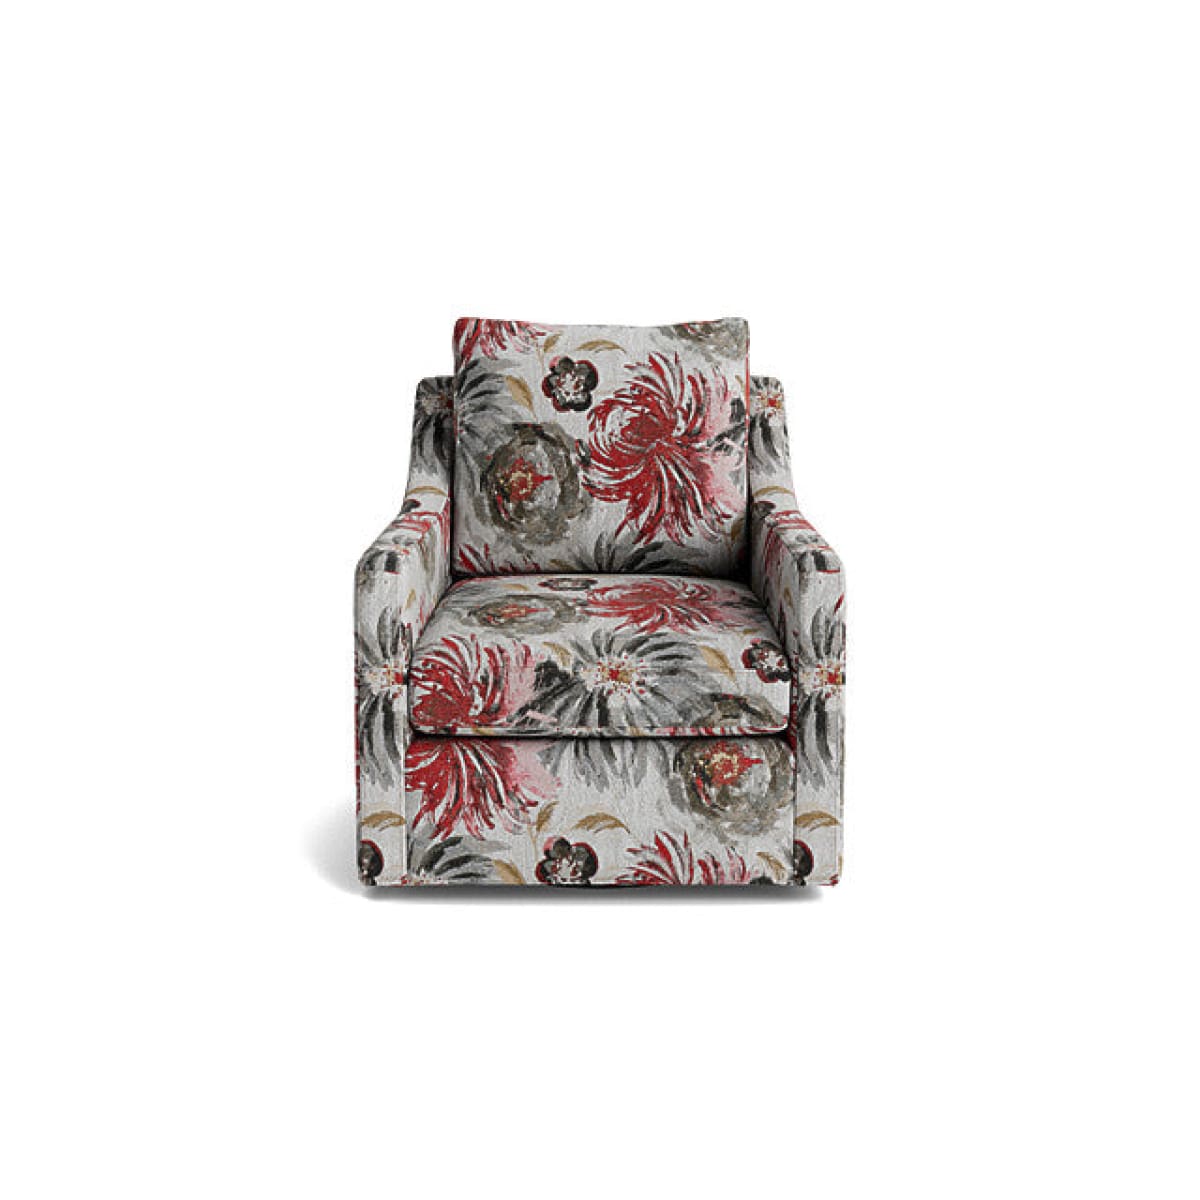 Grove Accent Chair - Crysanthemum Scarlet